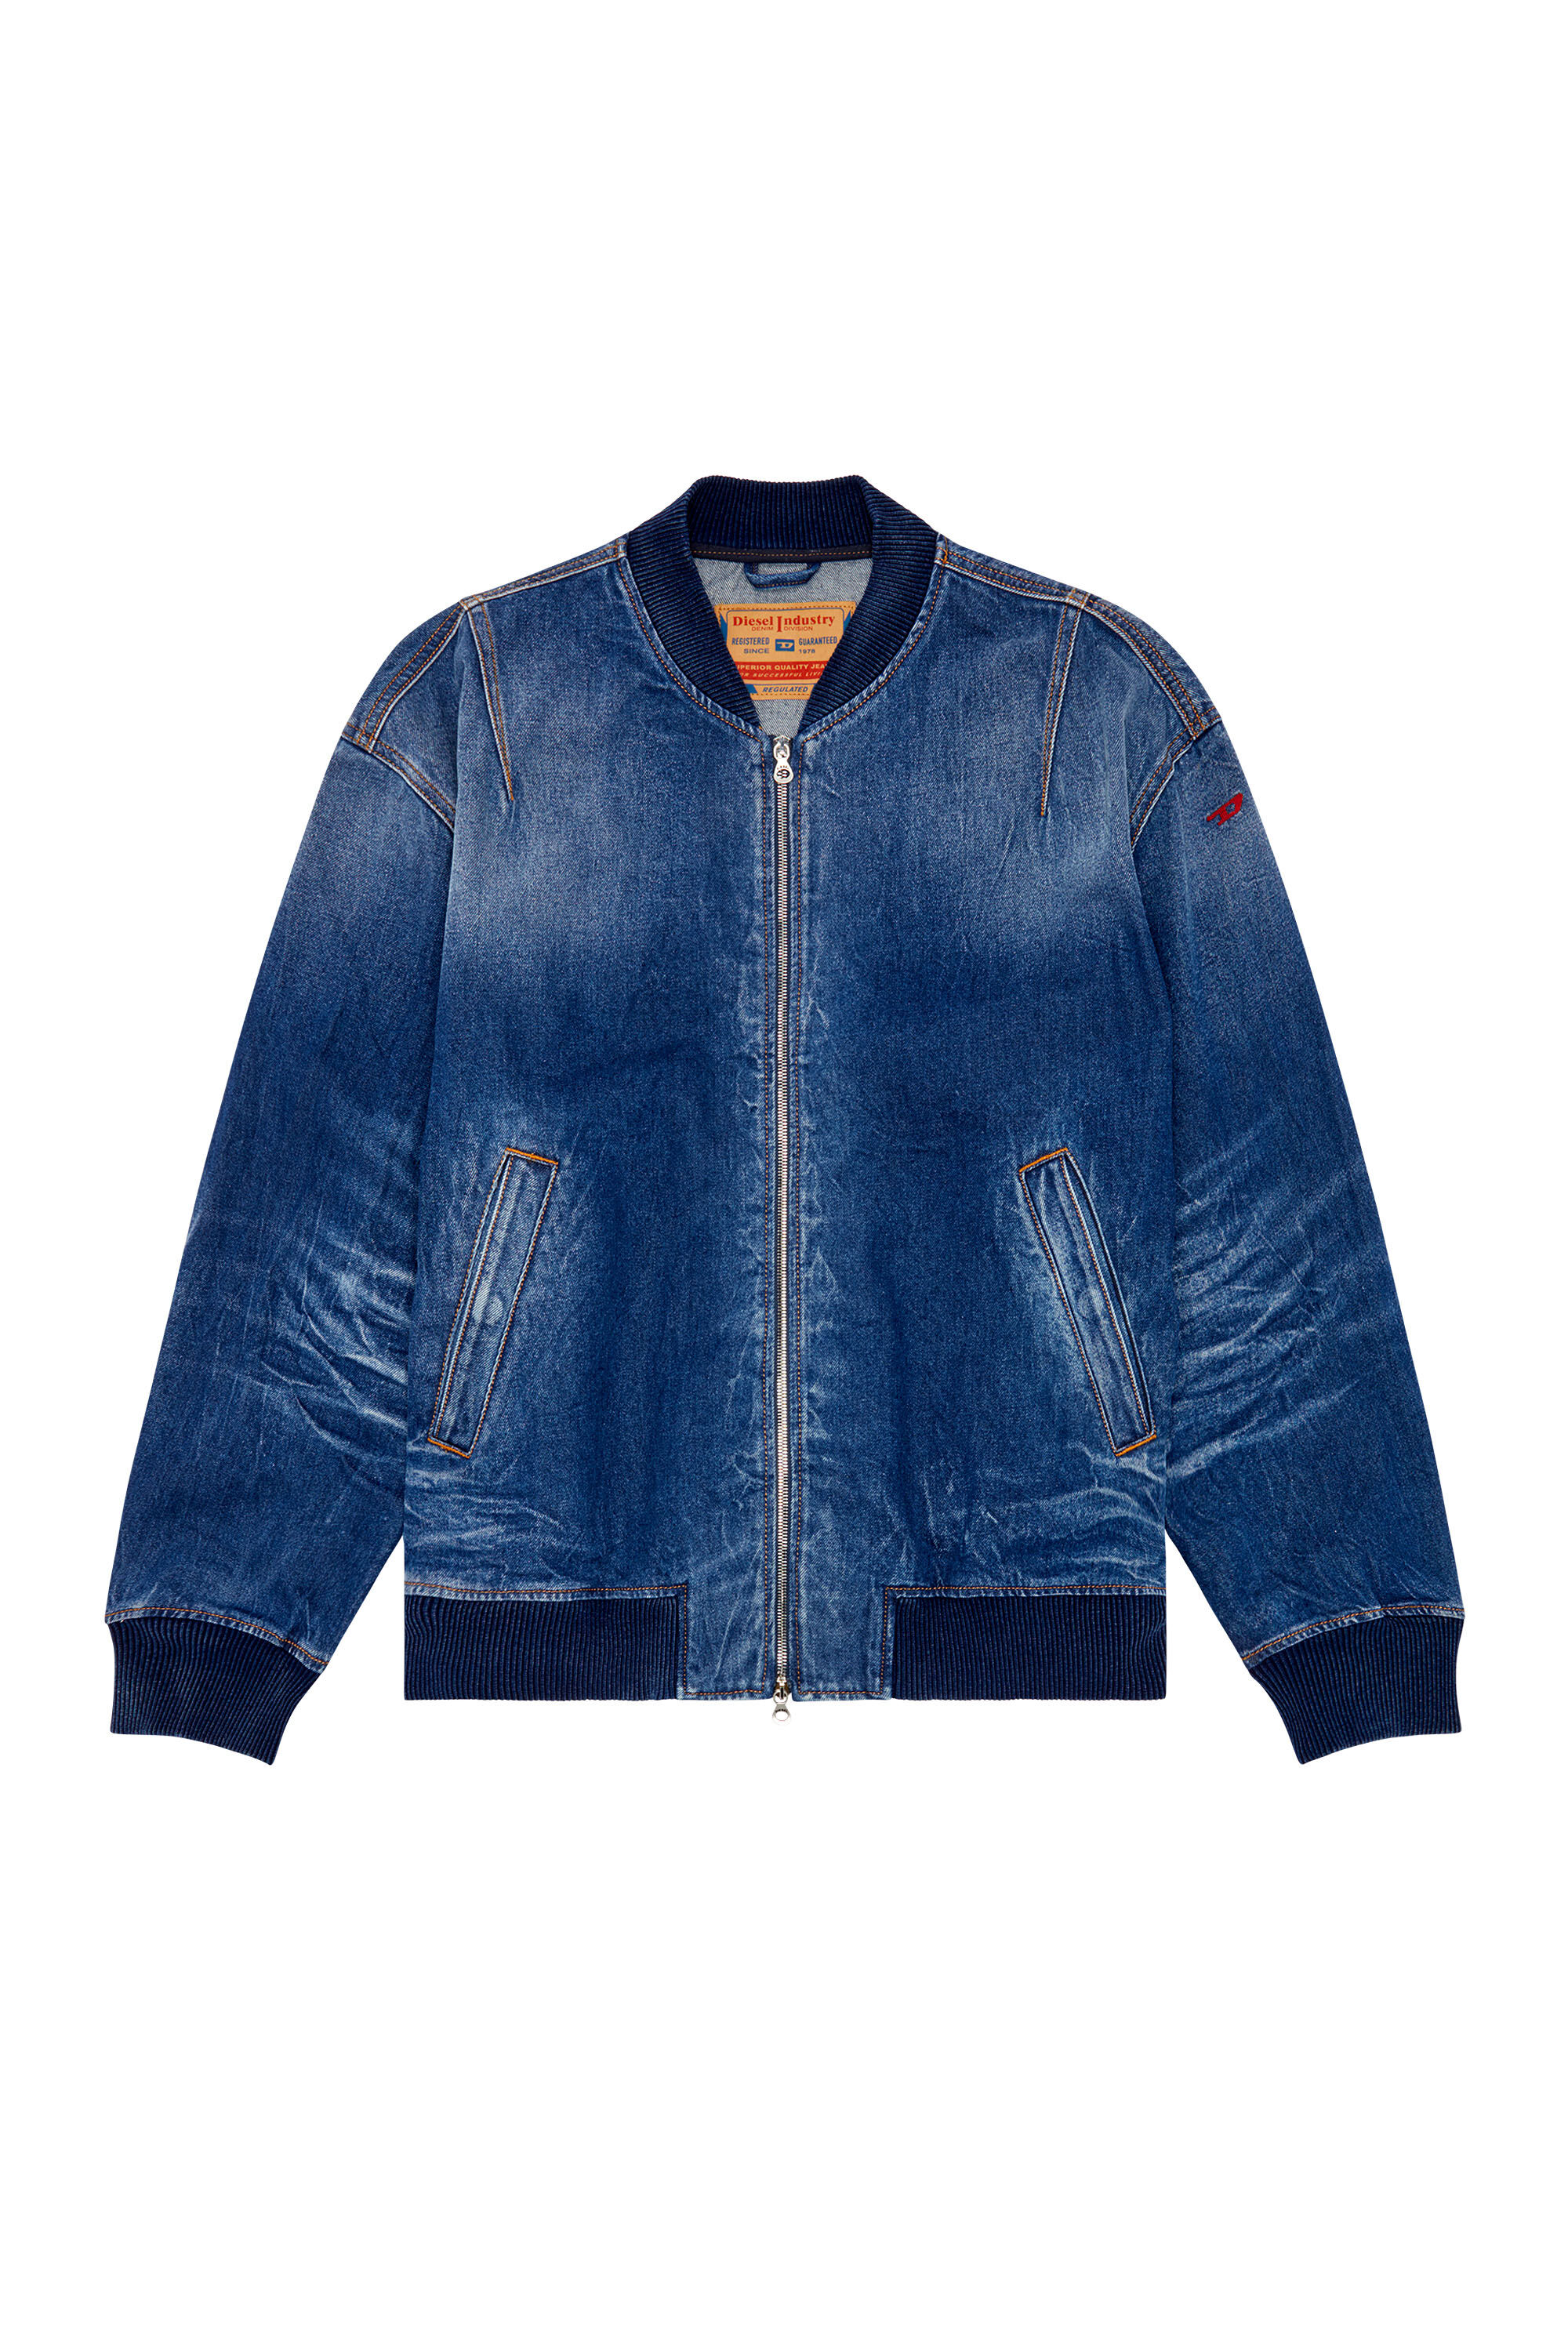 Men's Bomber jacket in dented denim | Blue | Diesel